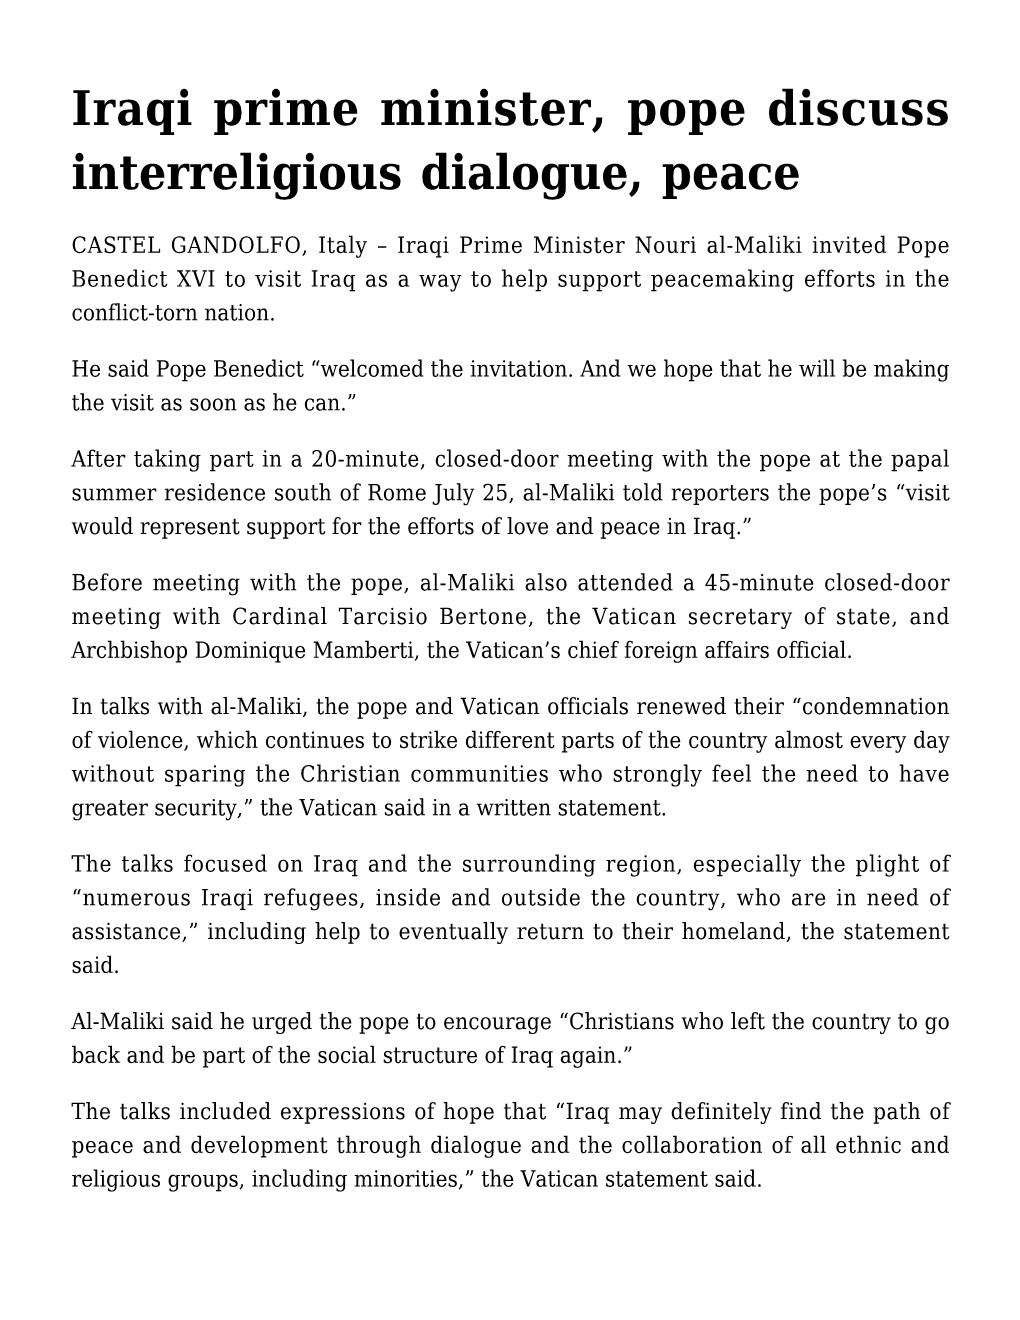 Iraqi Prime Minister, Pope Discuss Interreligious Dialogue, Peace